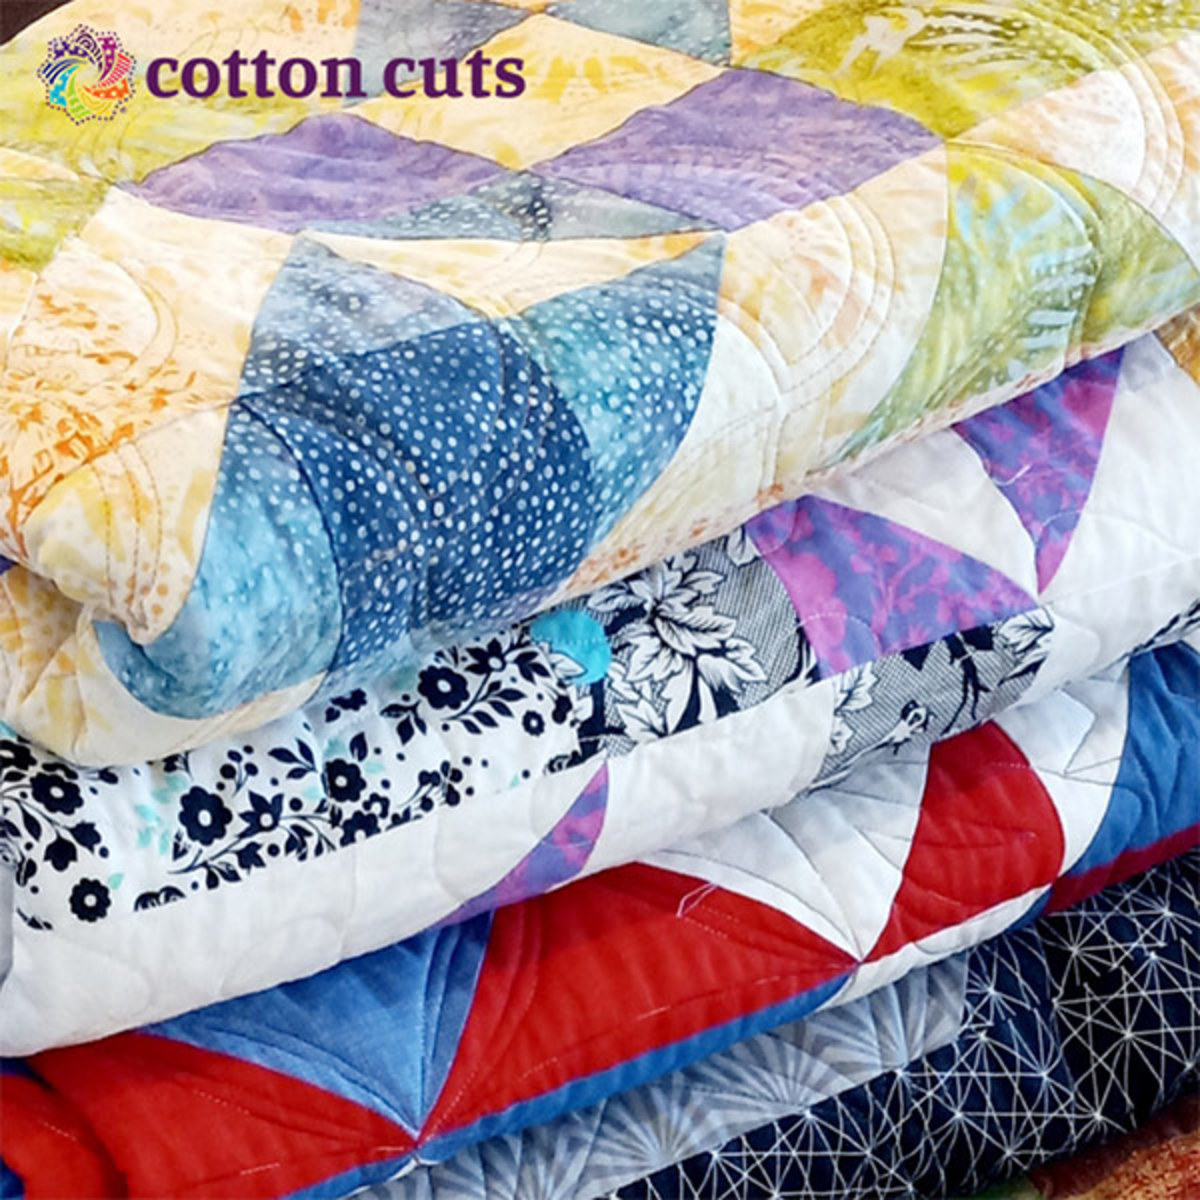 cotton-cuts-adforenews-web